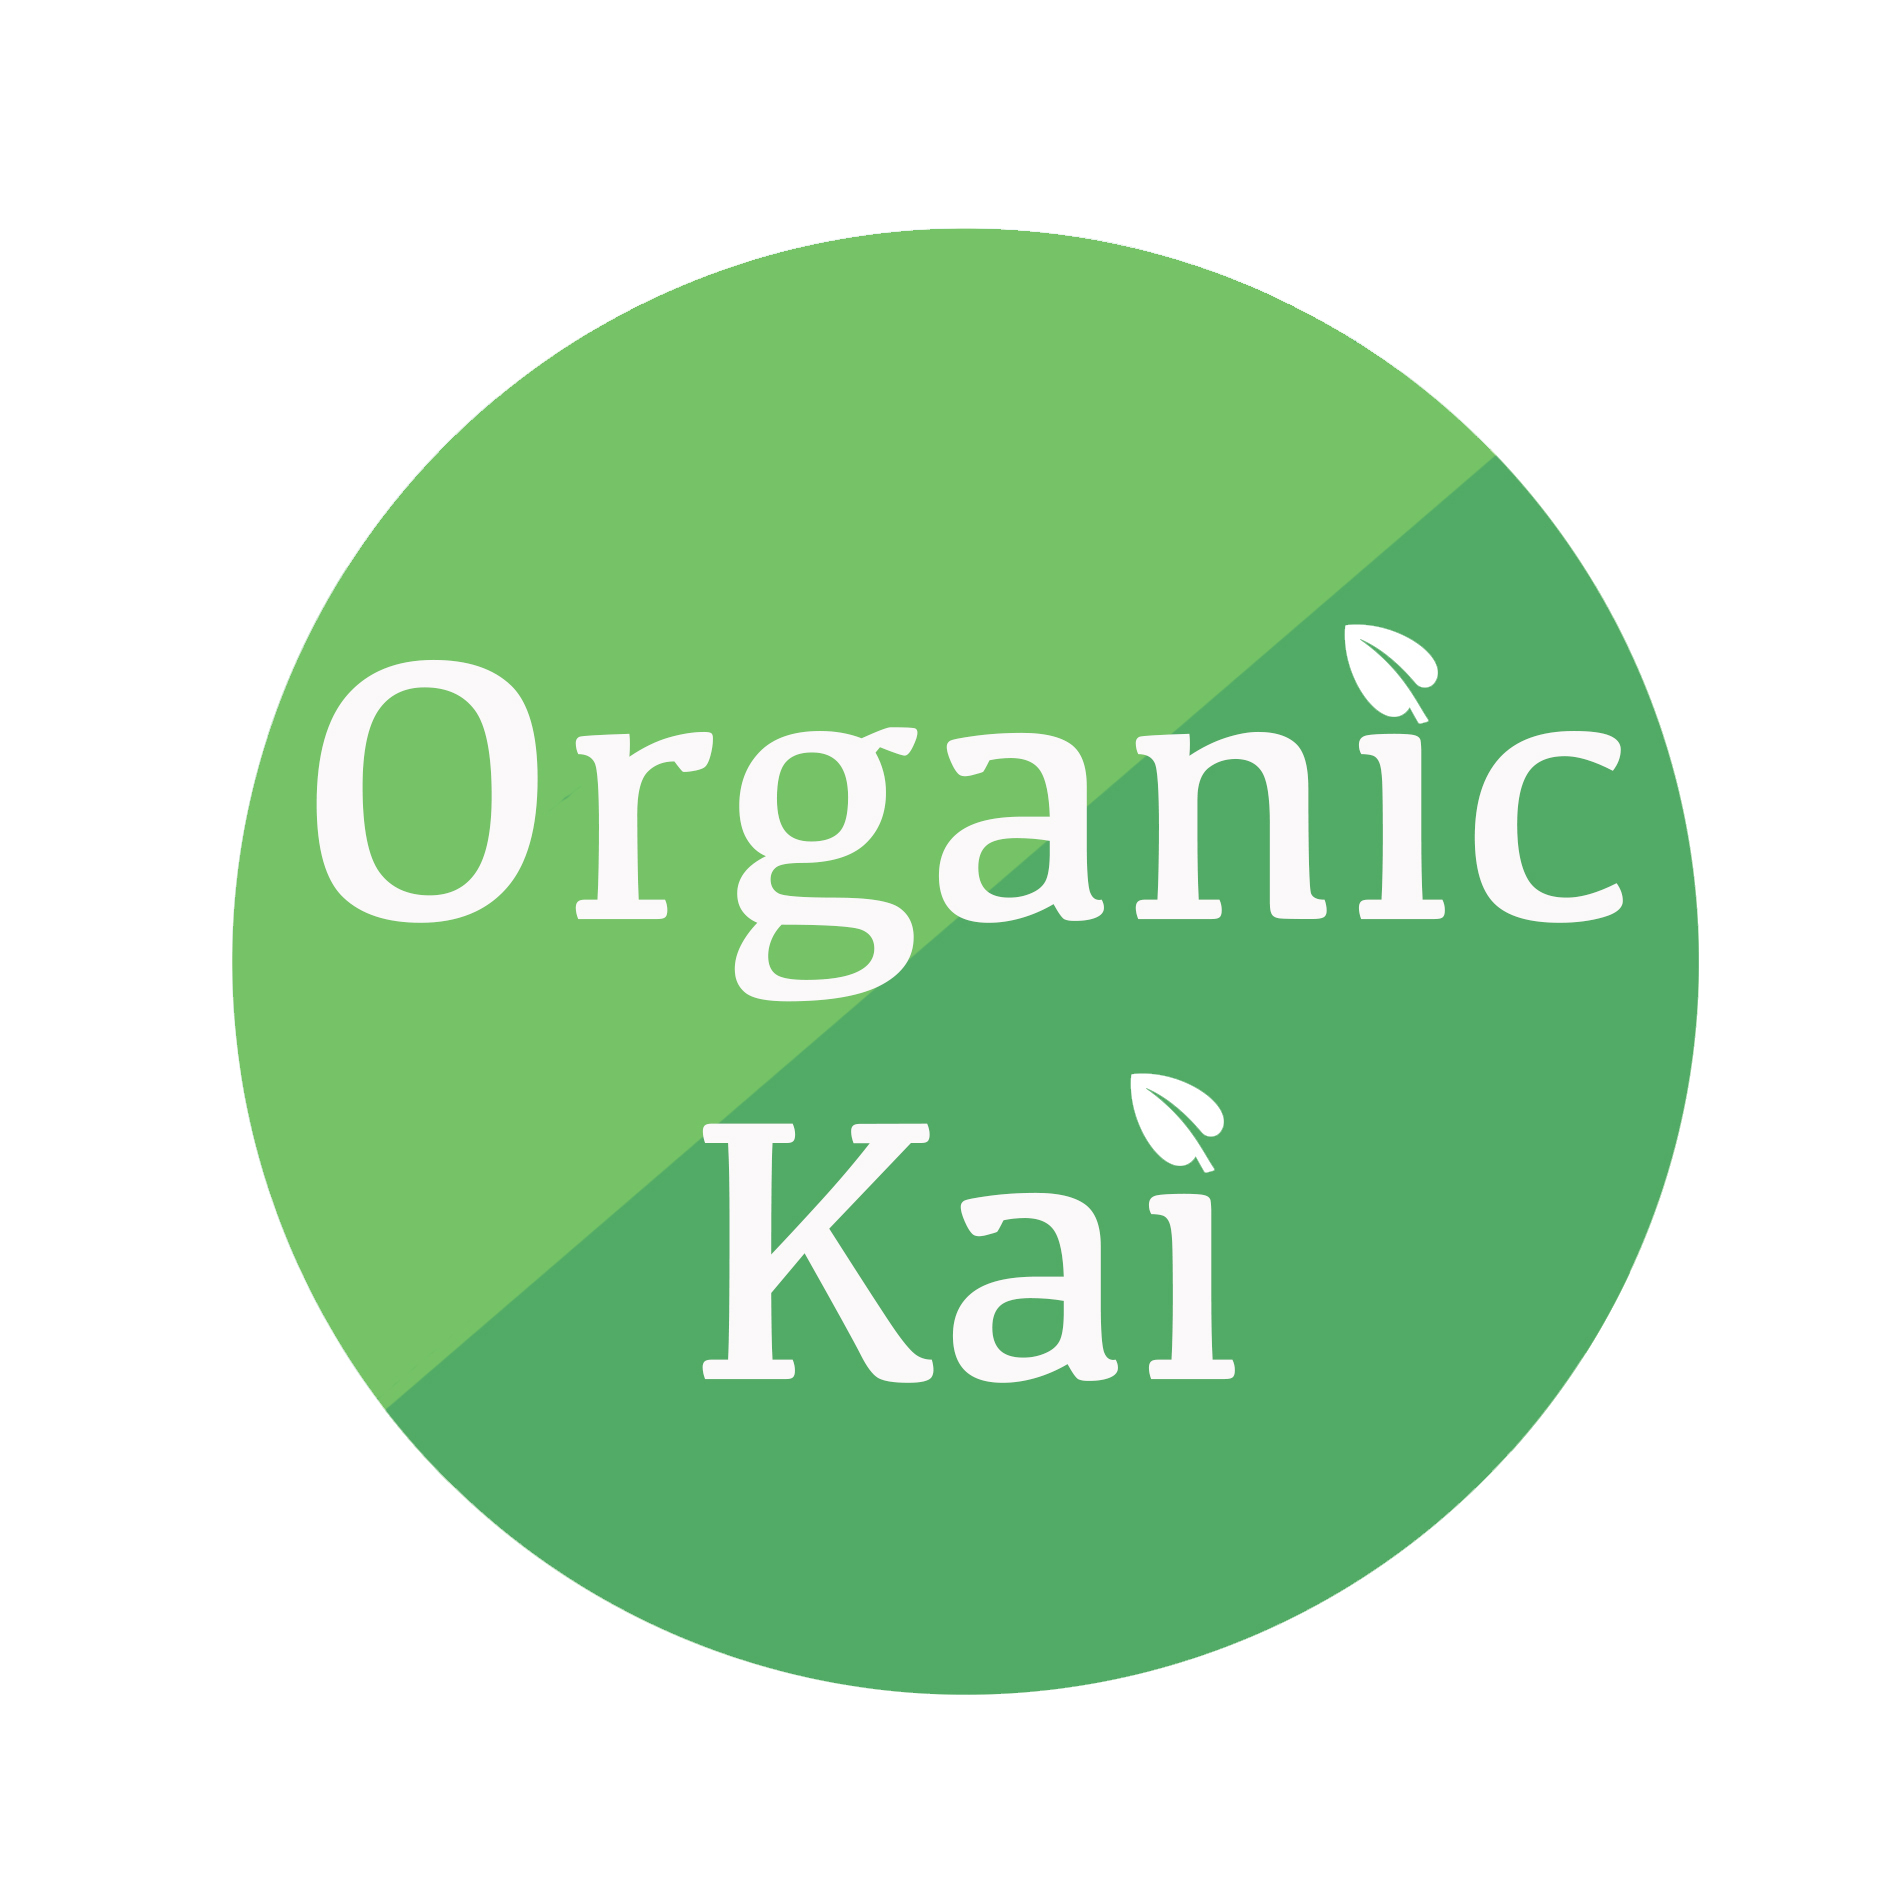 Organic Kai logo